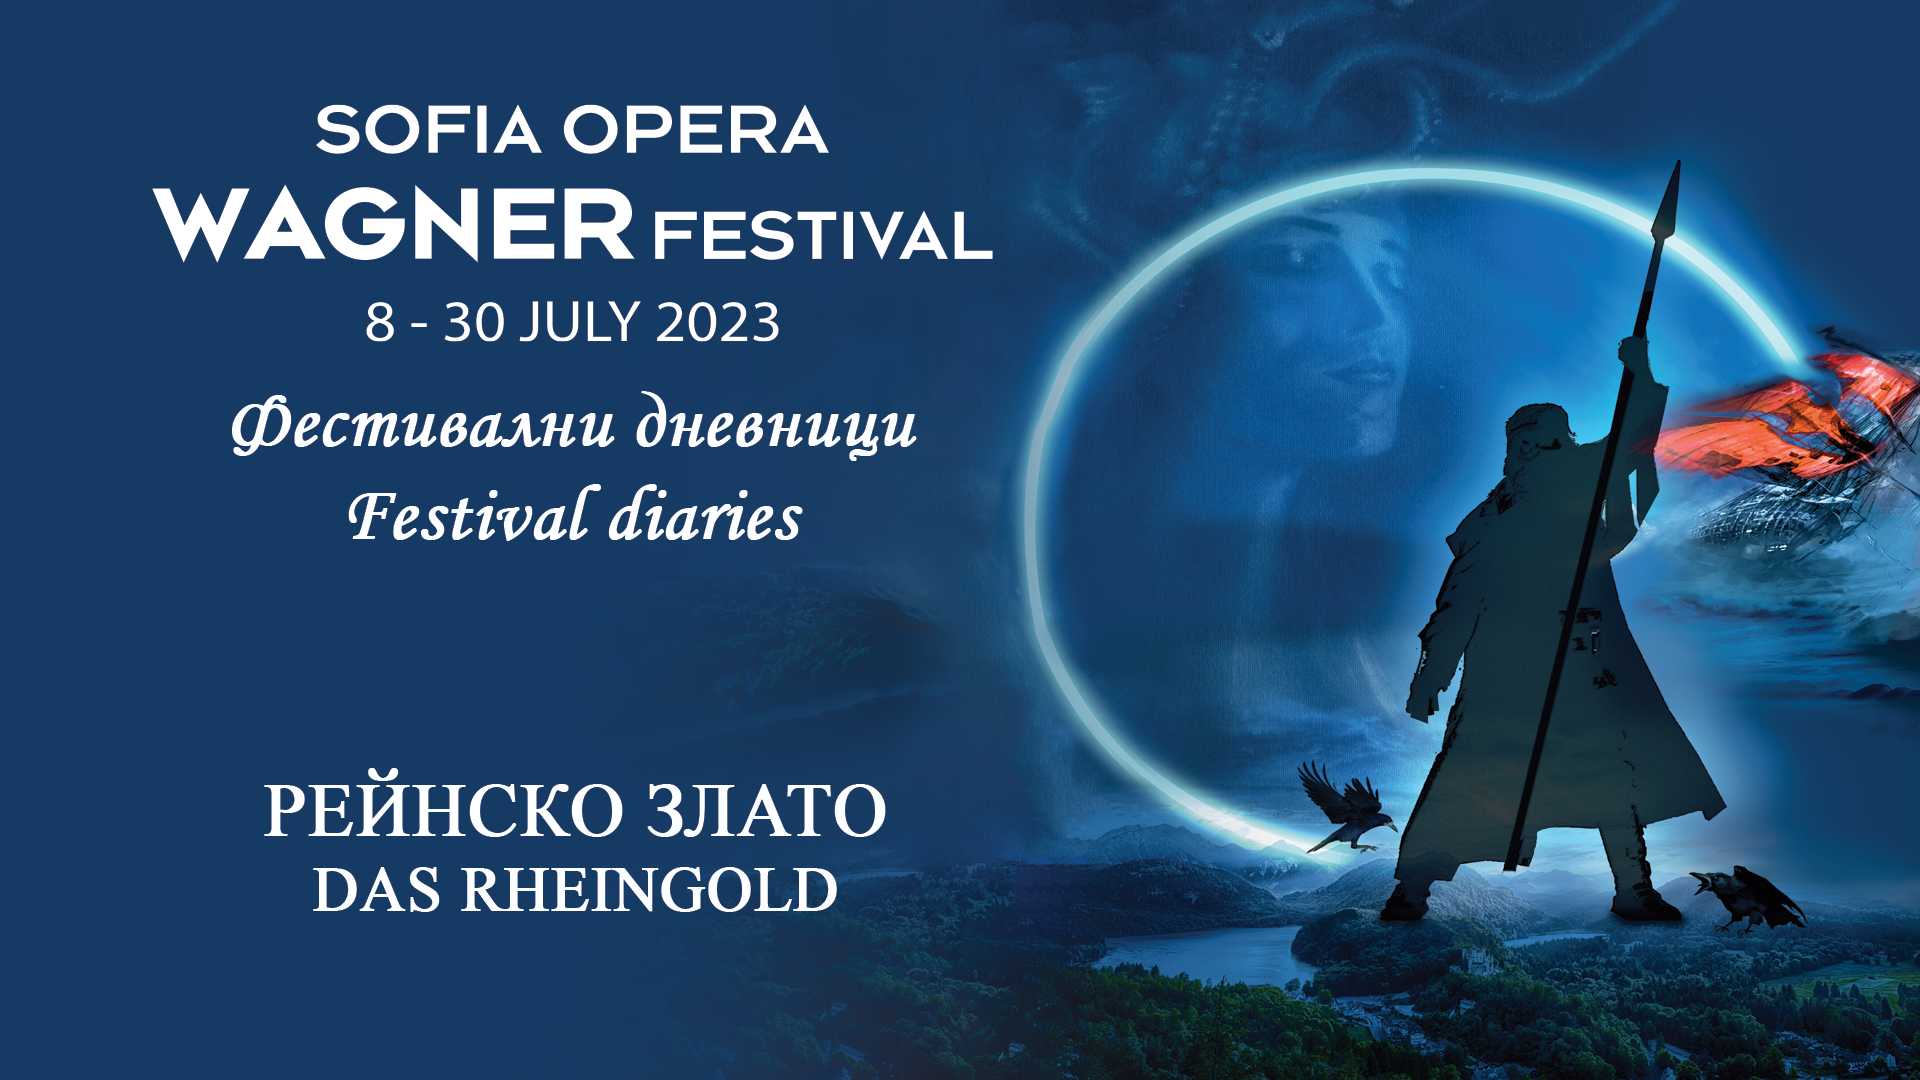 Amazing start of Sofia Opera Wagner Festival!